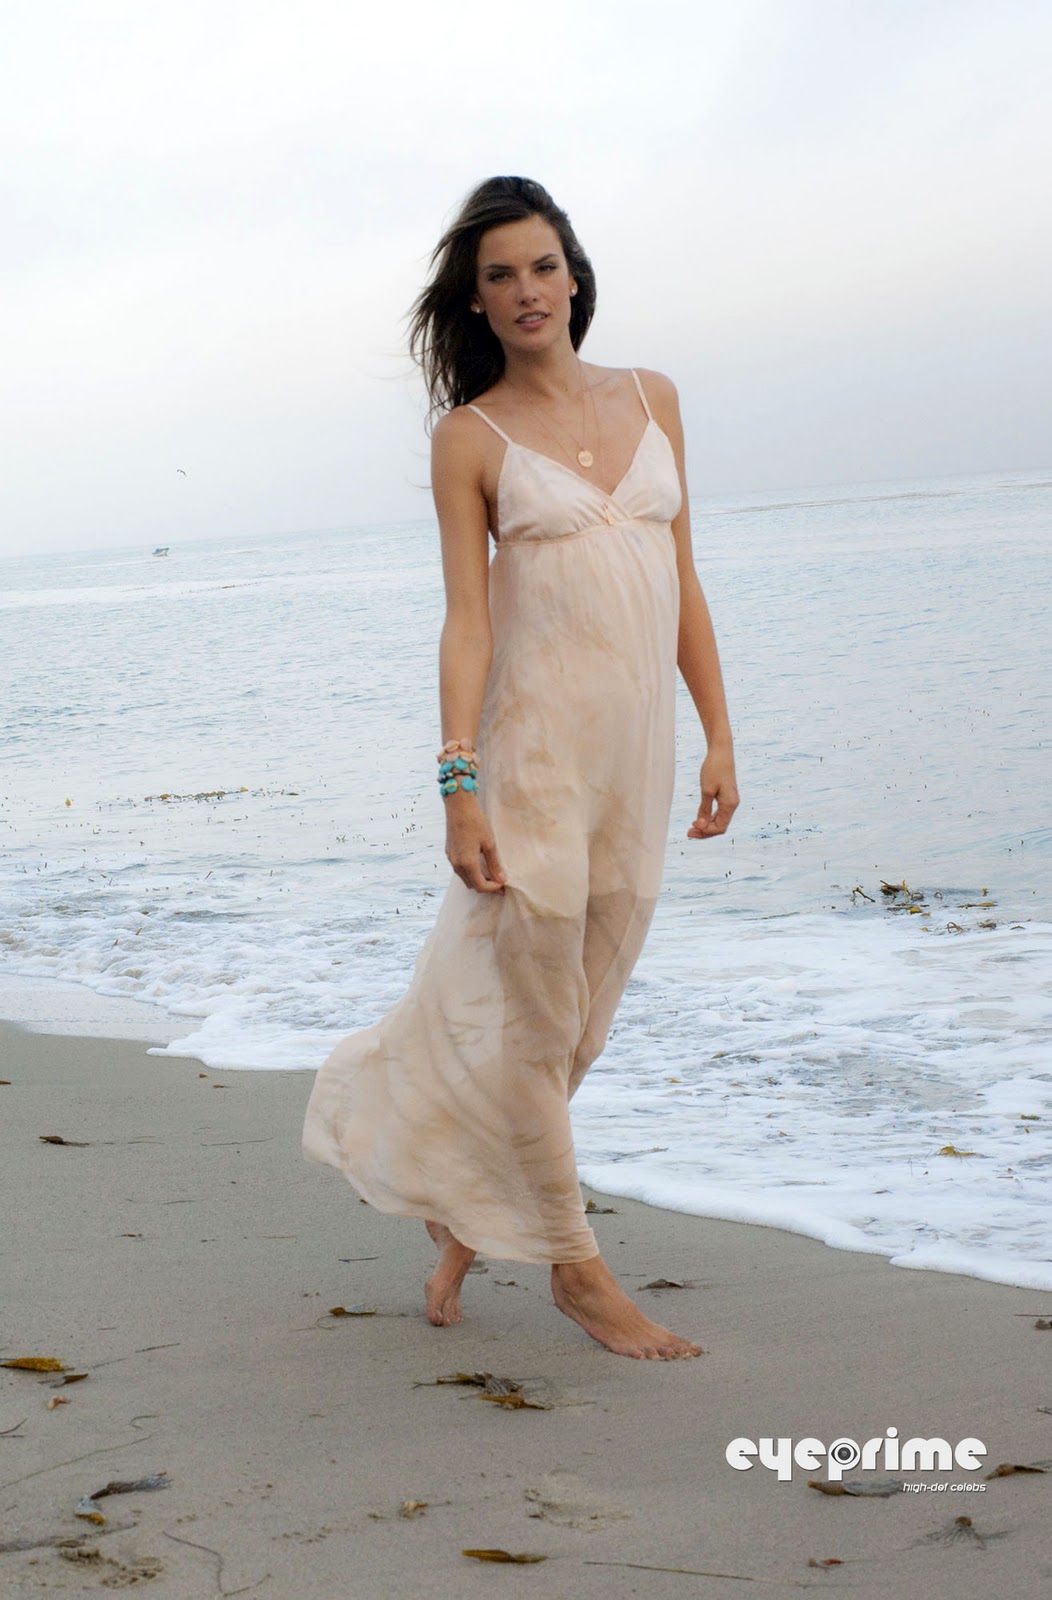 Hot Model Celebrity Alessandra Ambrosio Photoshoot Pics